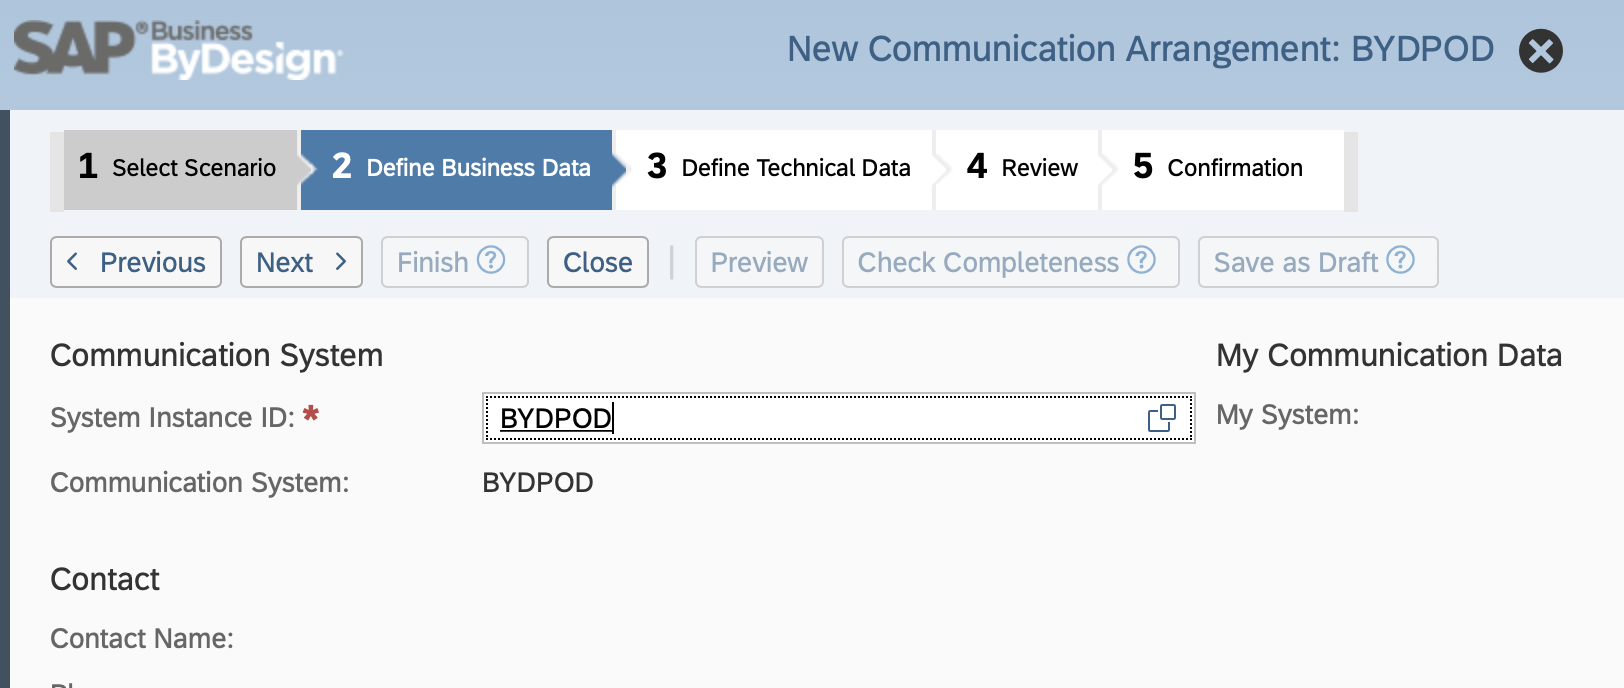 SAP Business ByDesign Communication Arrangement #2